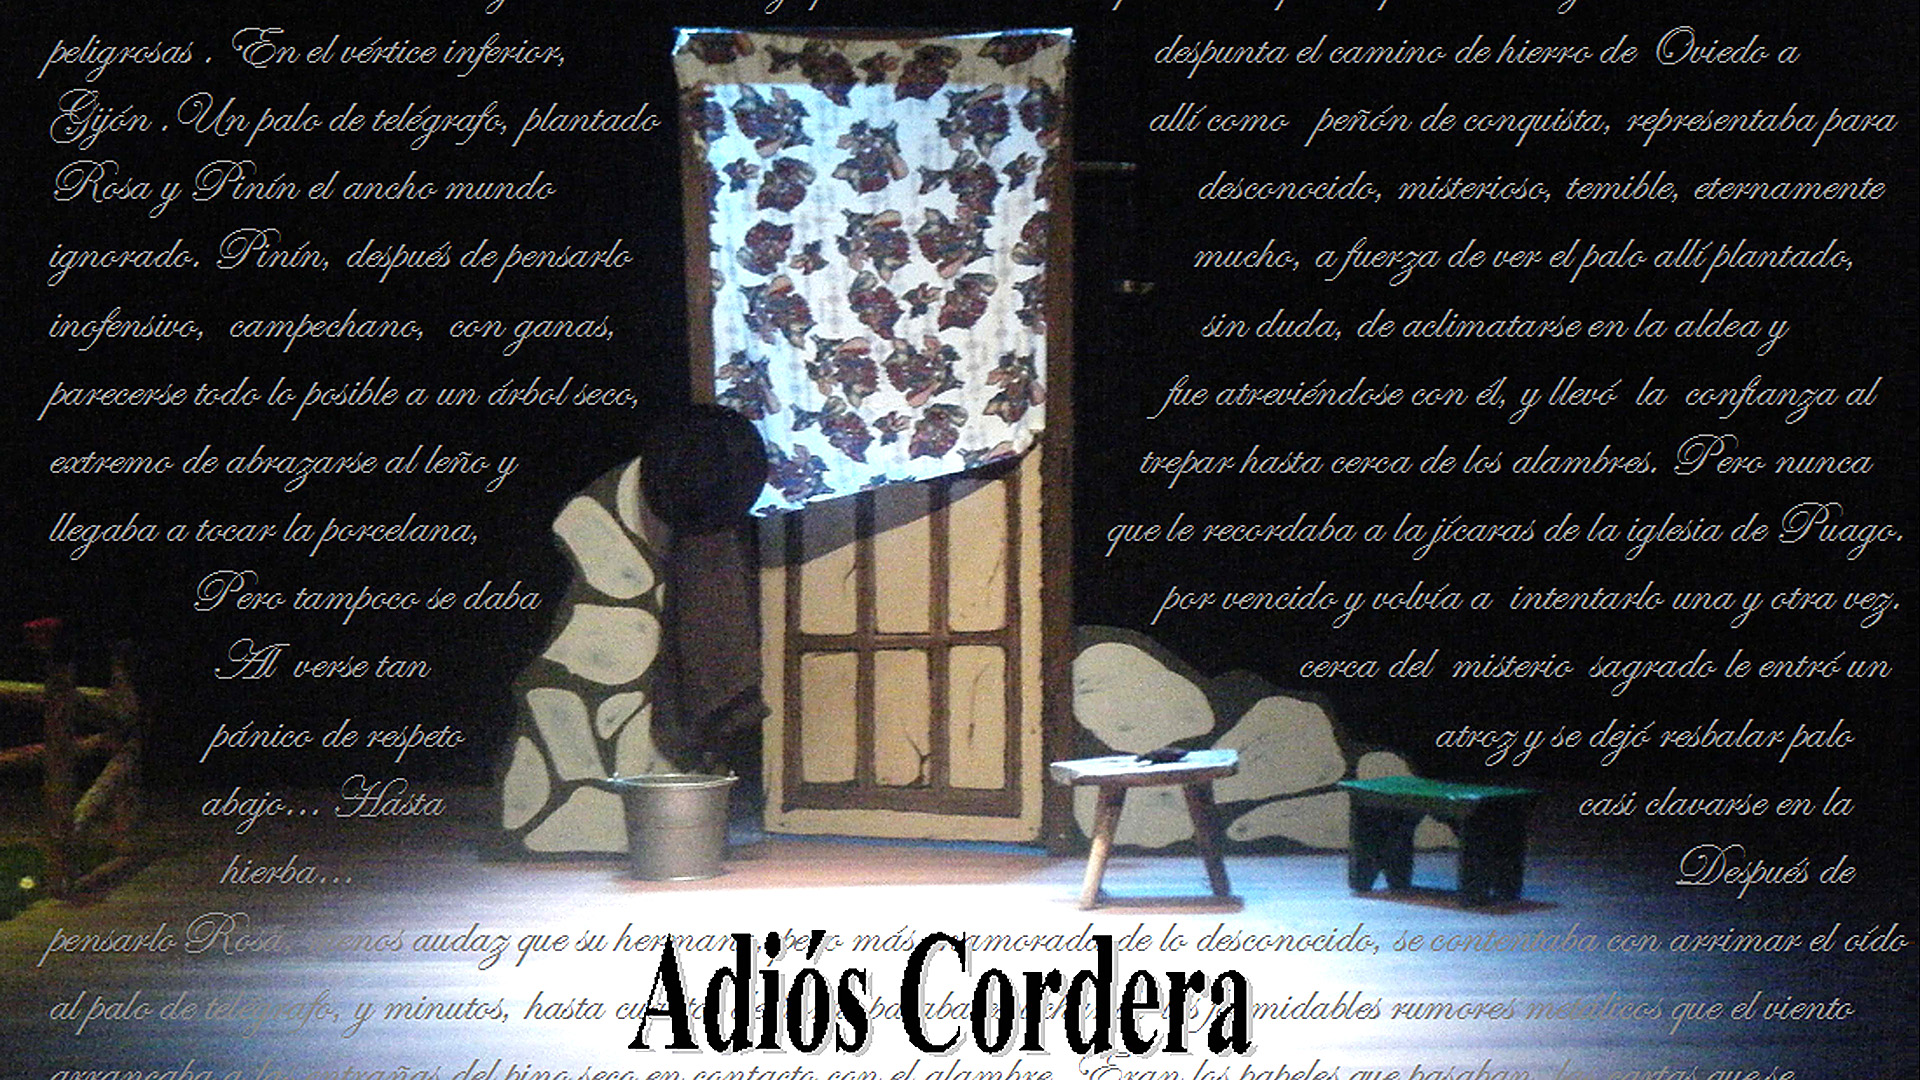 Espectaculo-ADIOS-CORDERA-fullHD